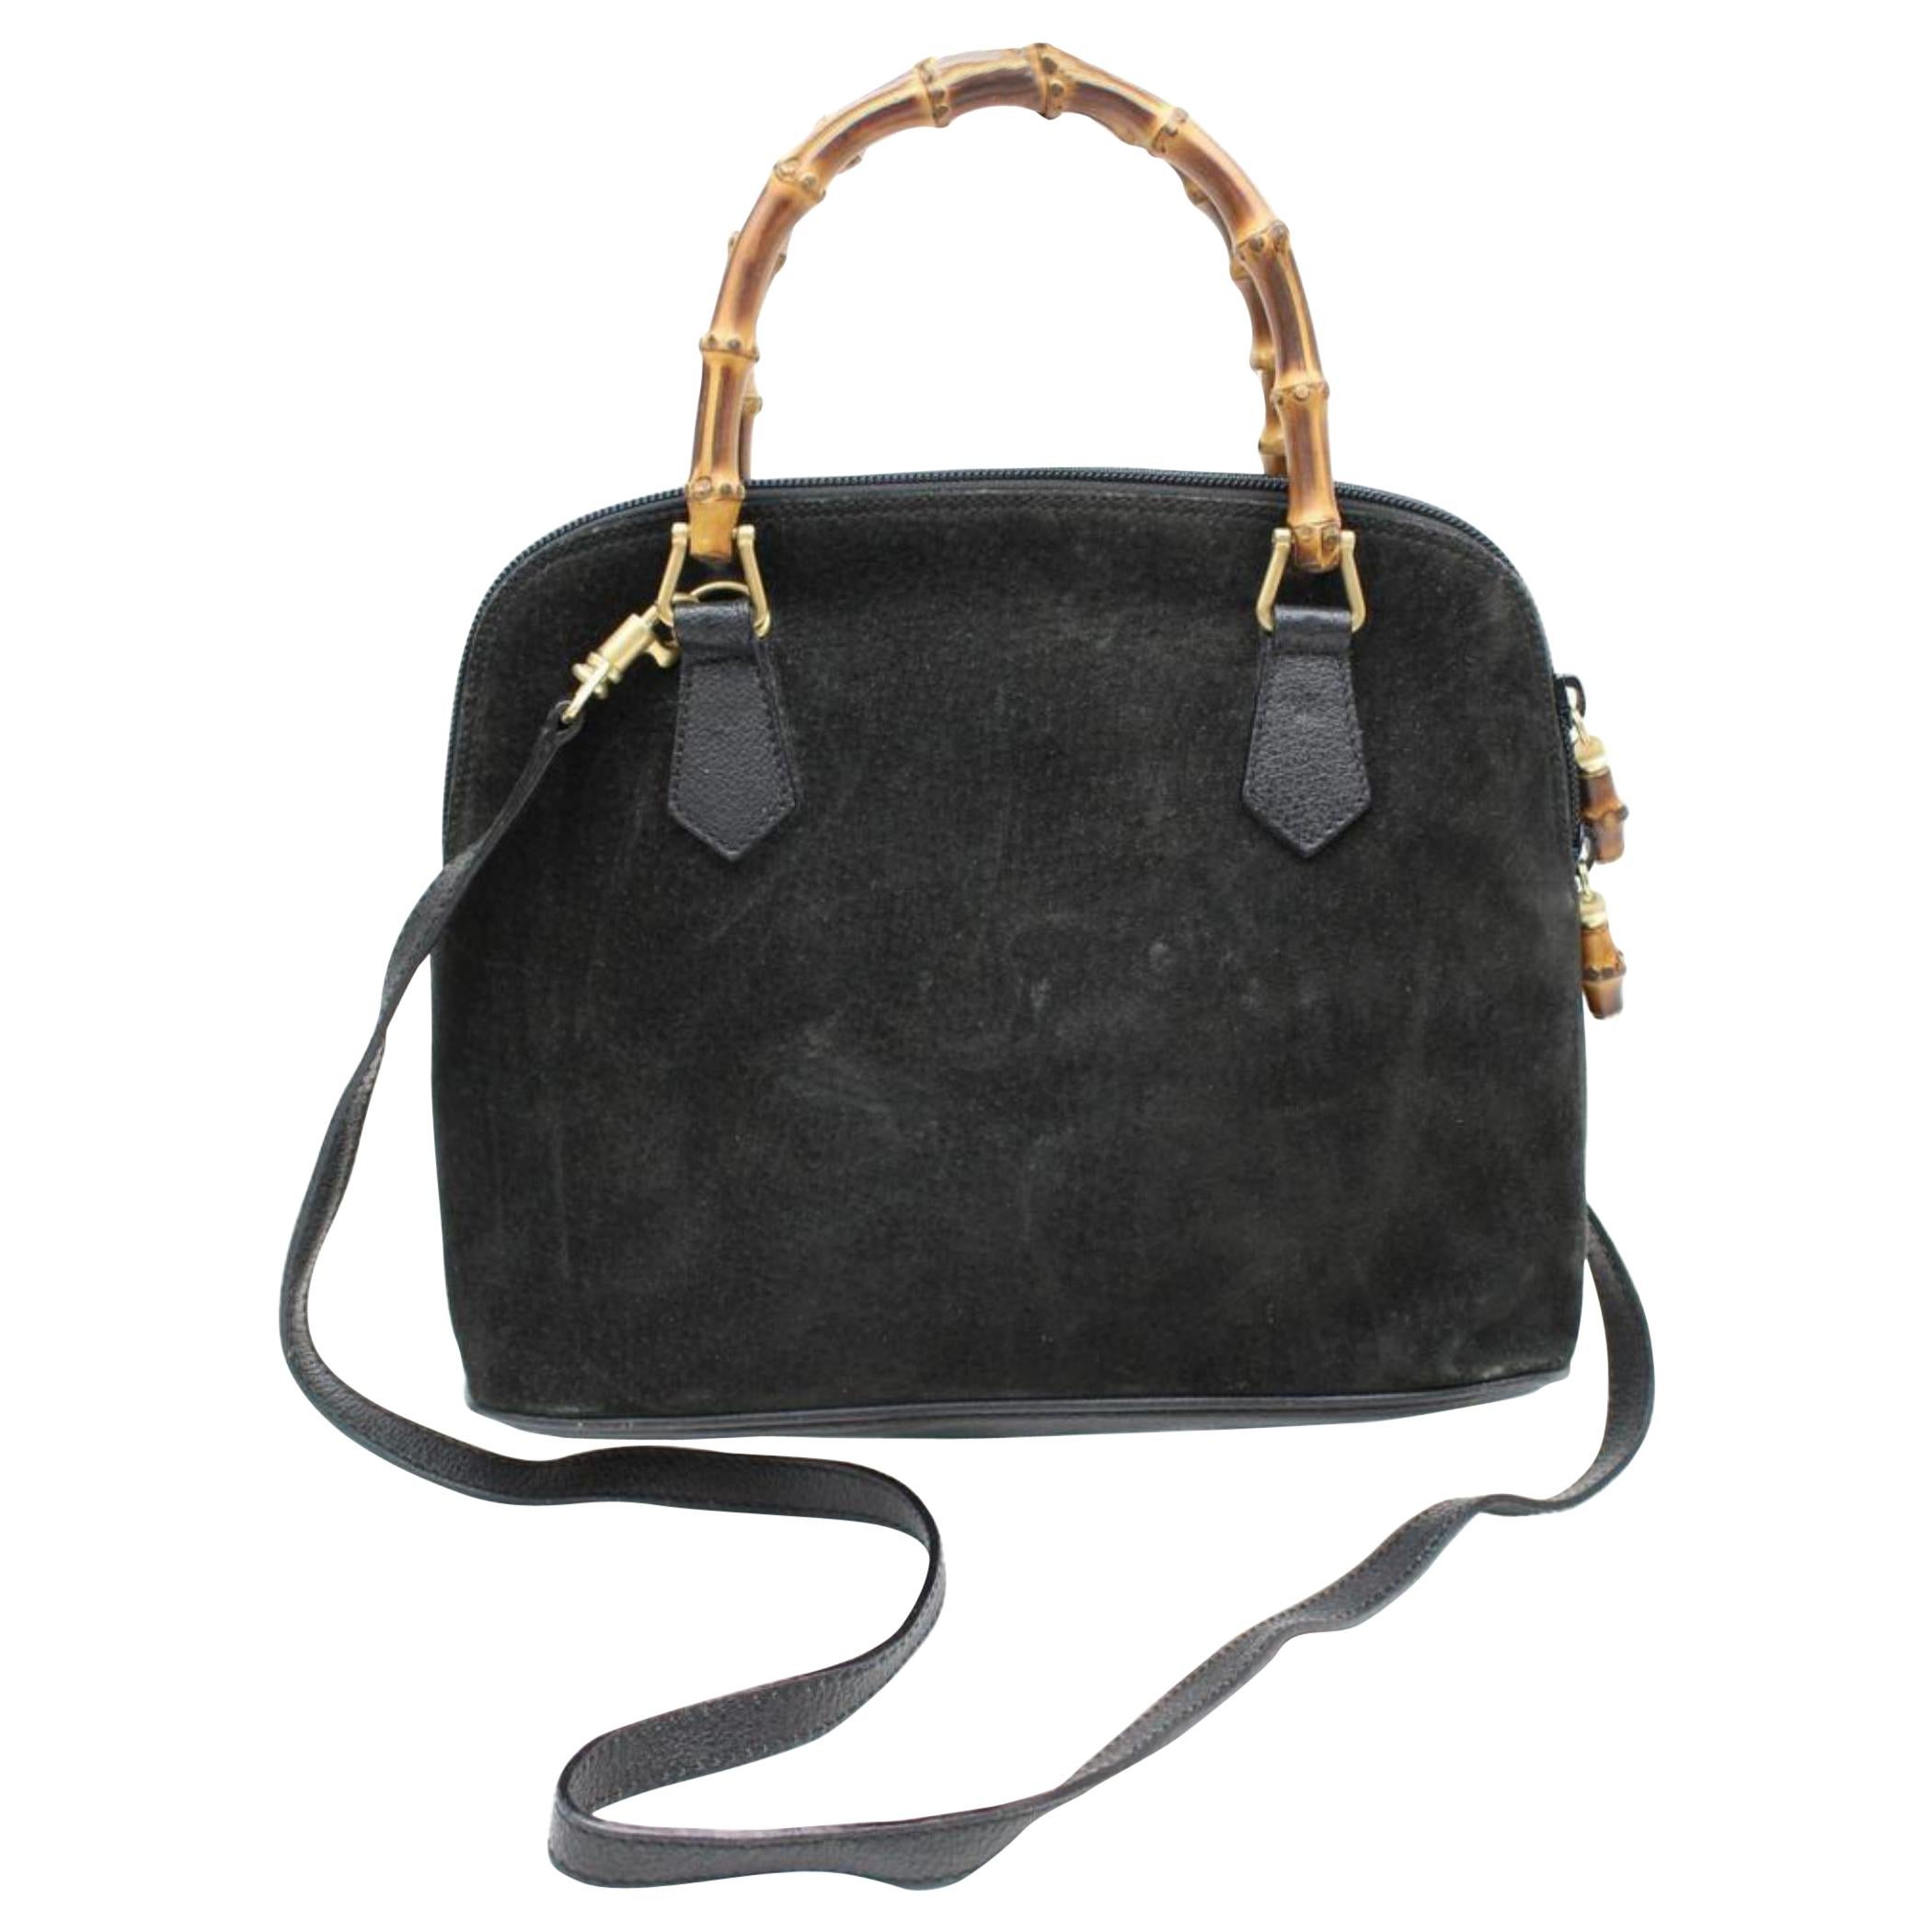 Gucci Bamboo 2way Satchel 865746 Black Suede Leather Shoulder Bag For Sale